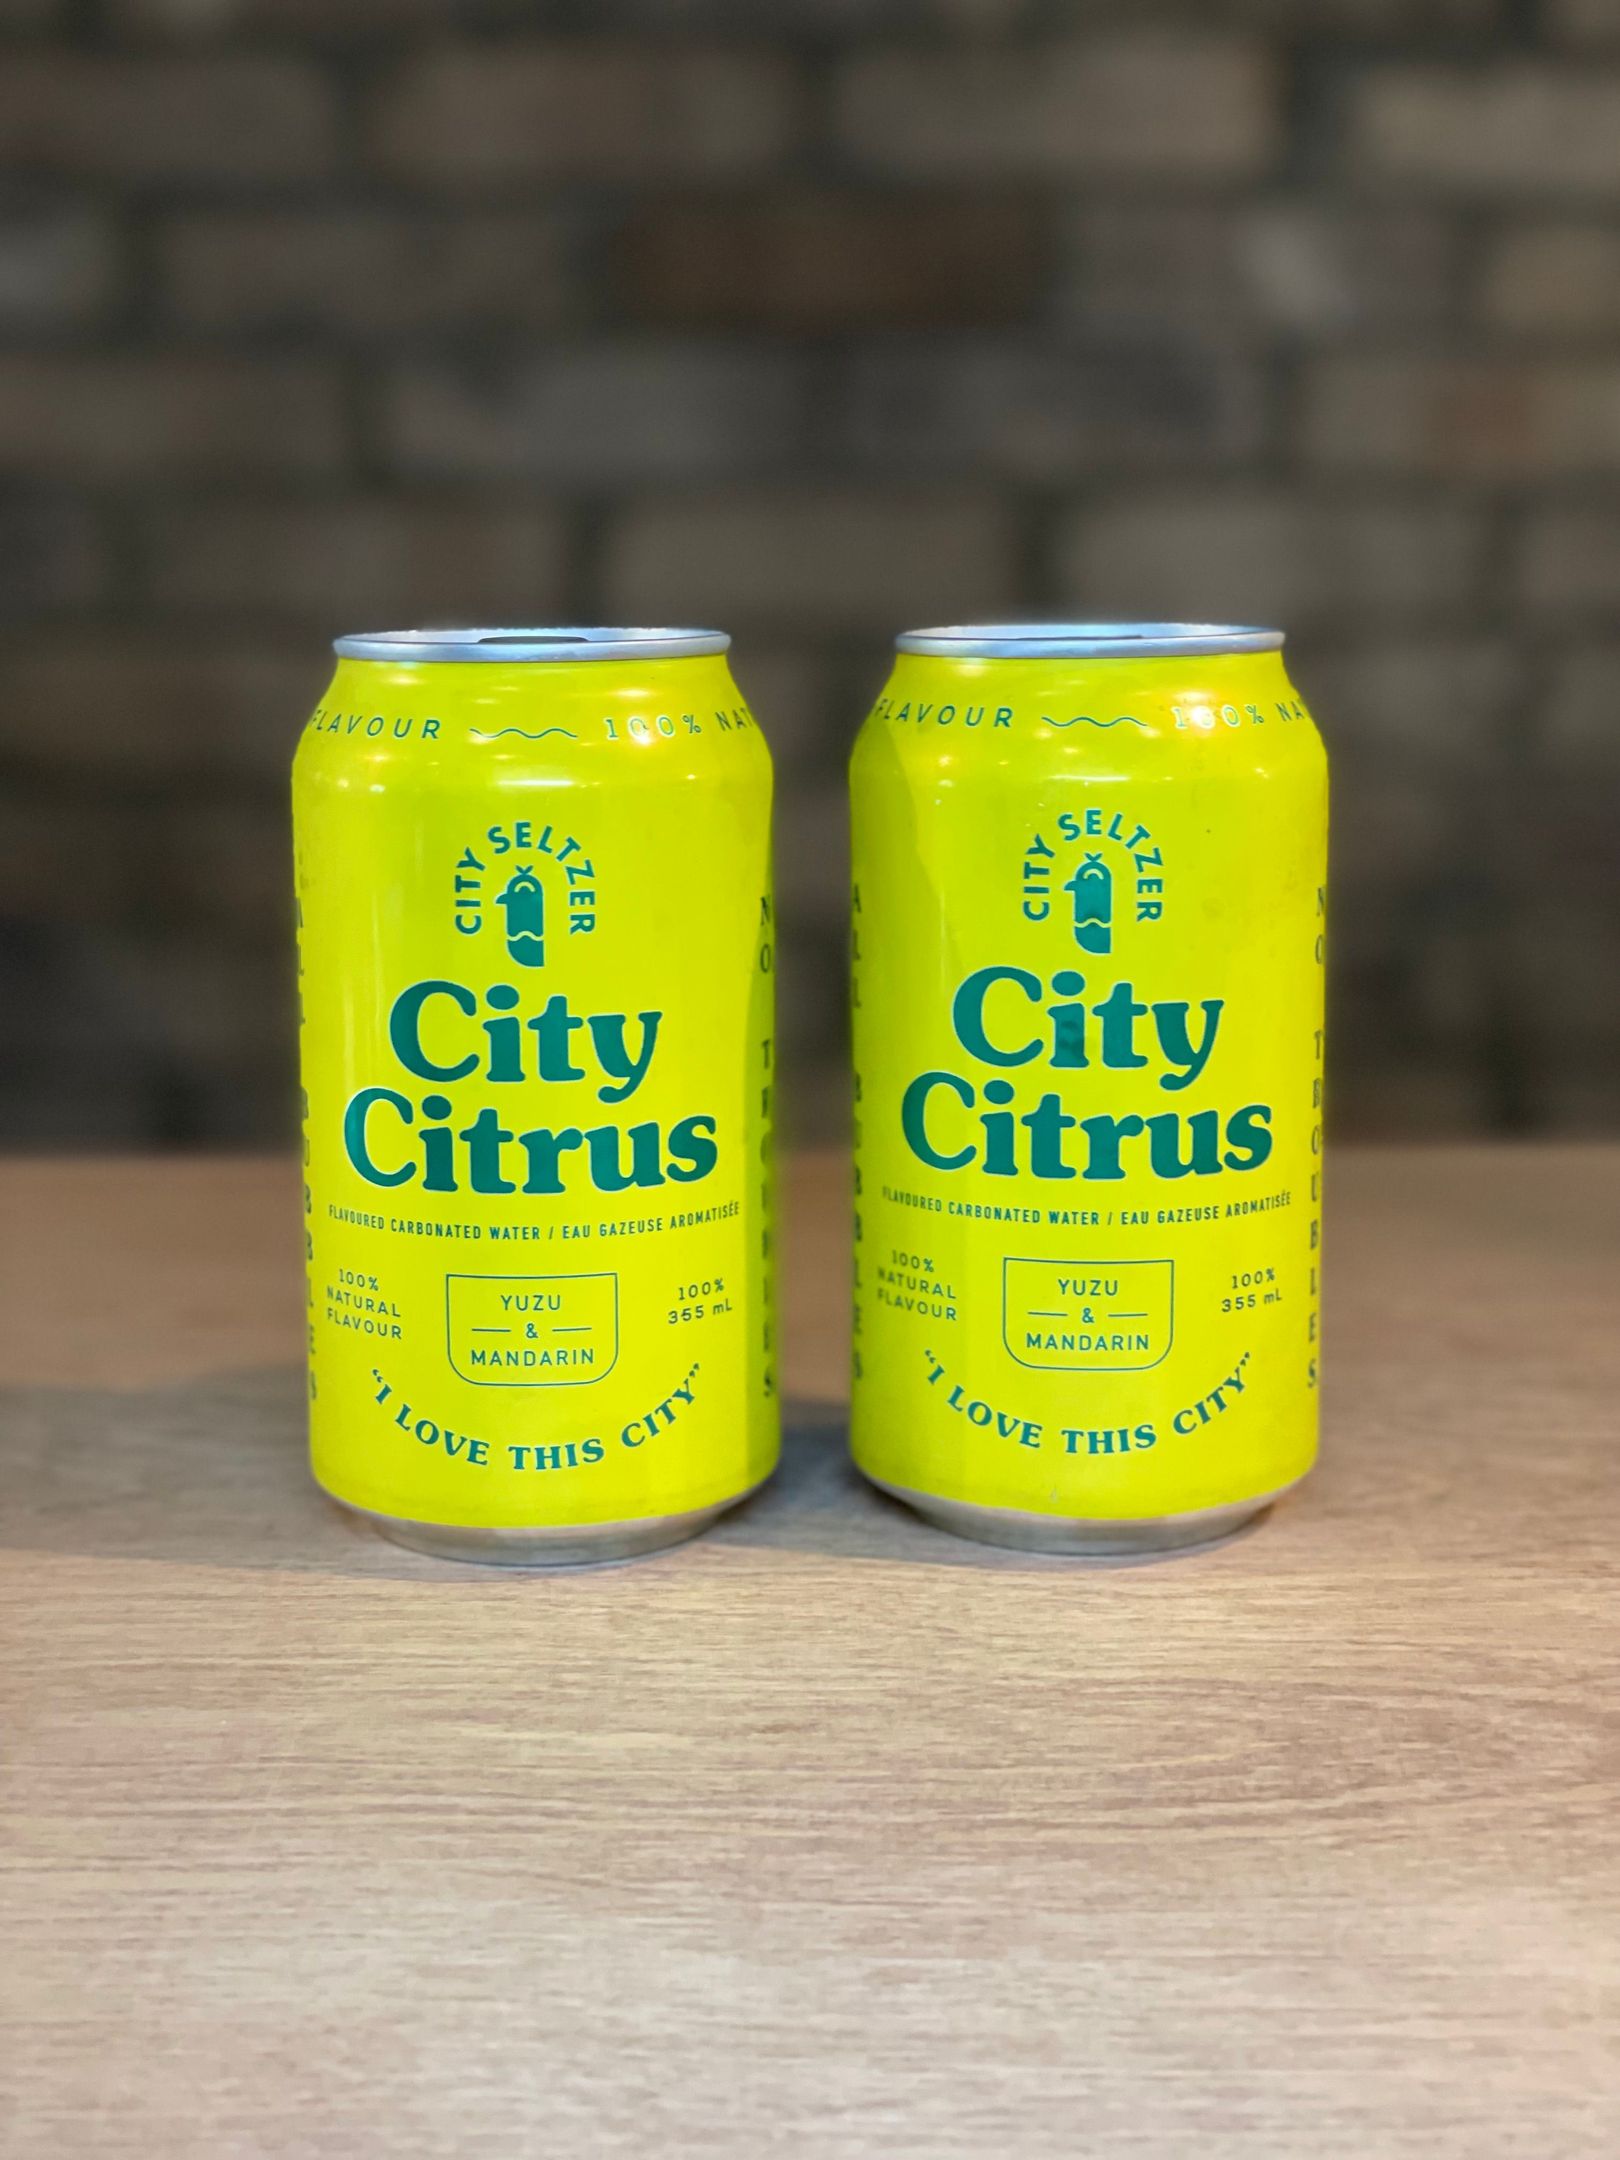 City Citrus